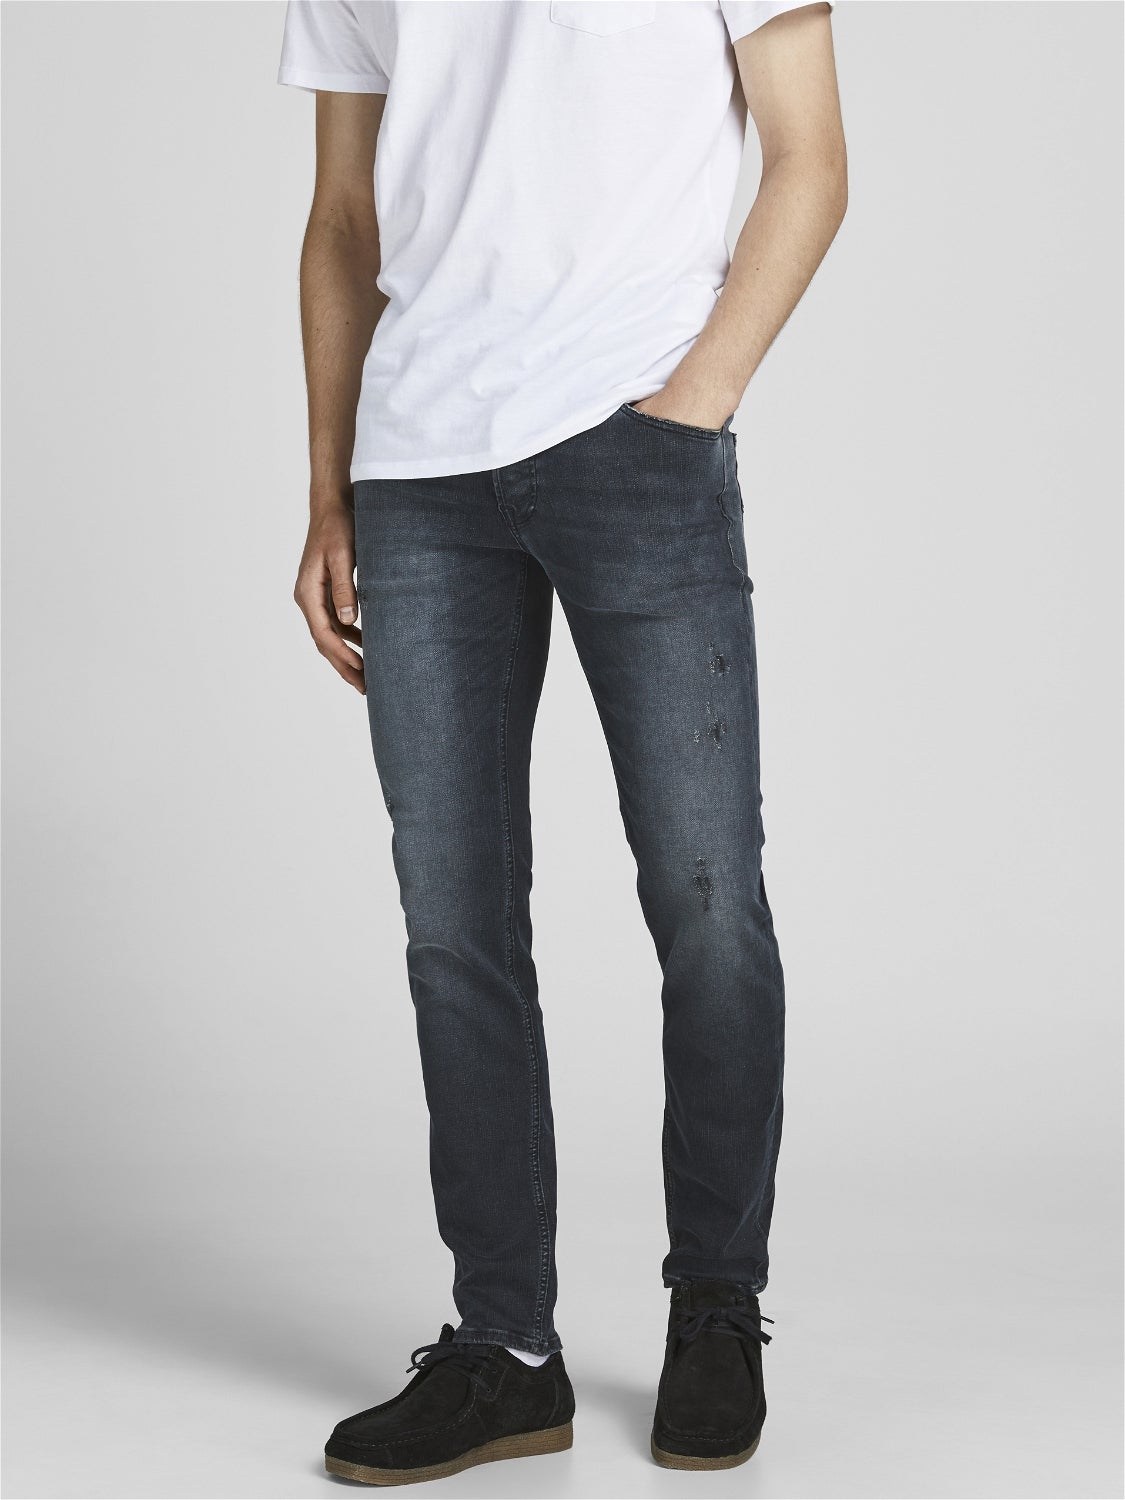 Jack & Jones Jeggings & Skinny & Slim MODA UOMO Jeans Consumato Grigio W34/L34 sconto 51% 